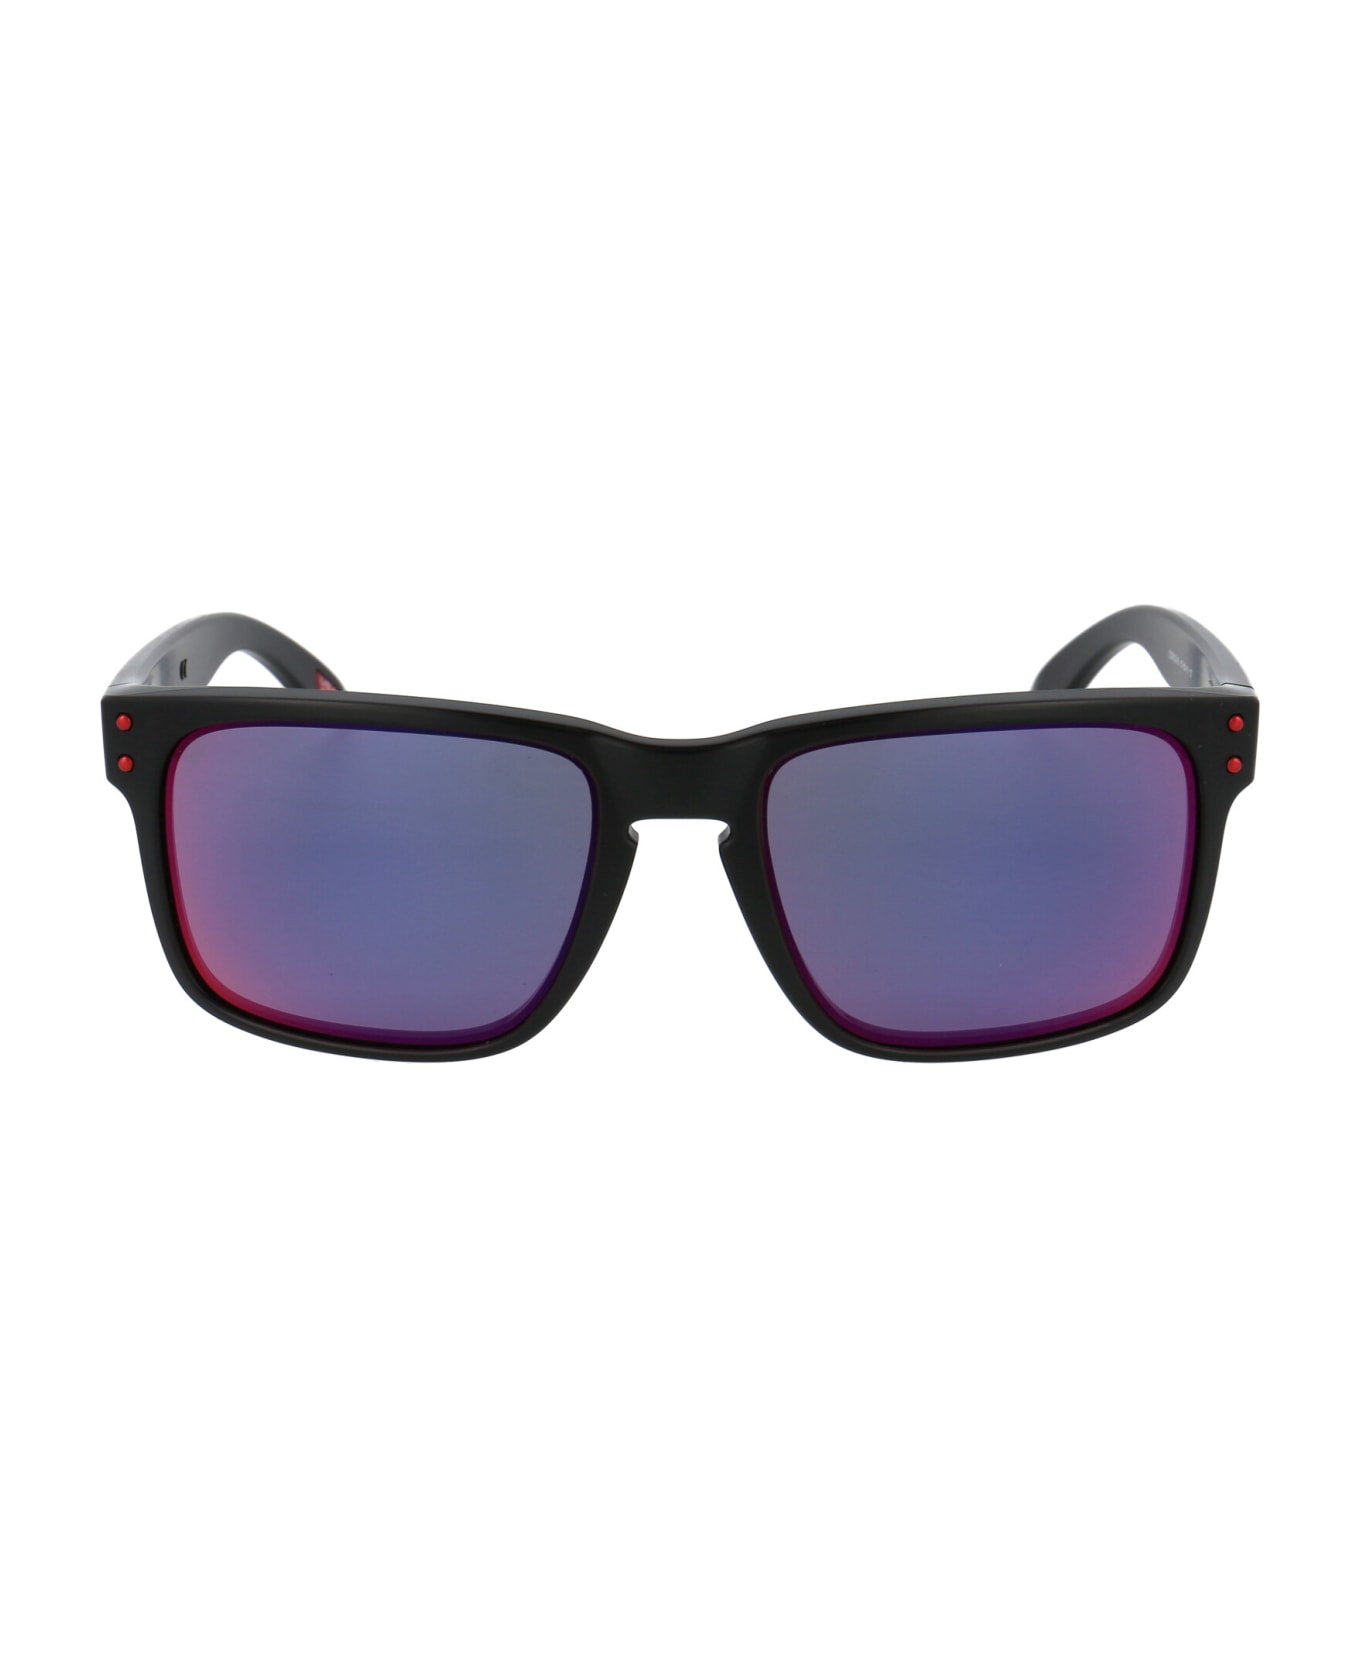 Oakley Holbrook Sunglasses - 910236 MATTE BLACK